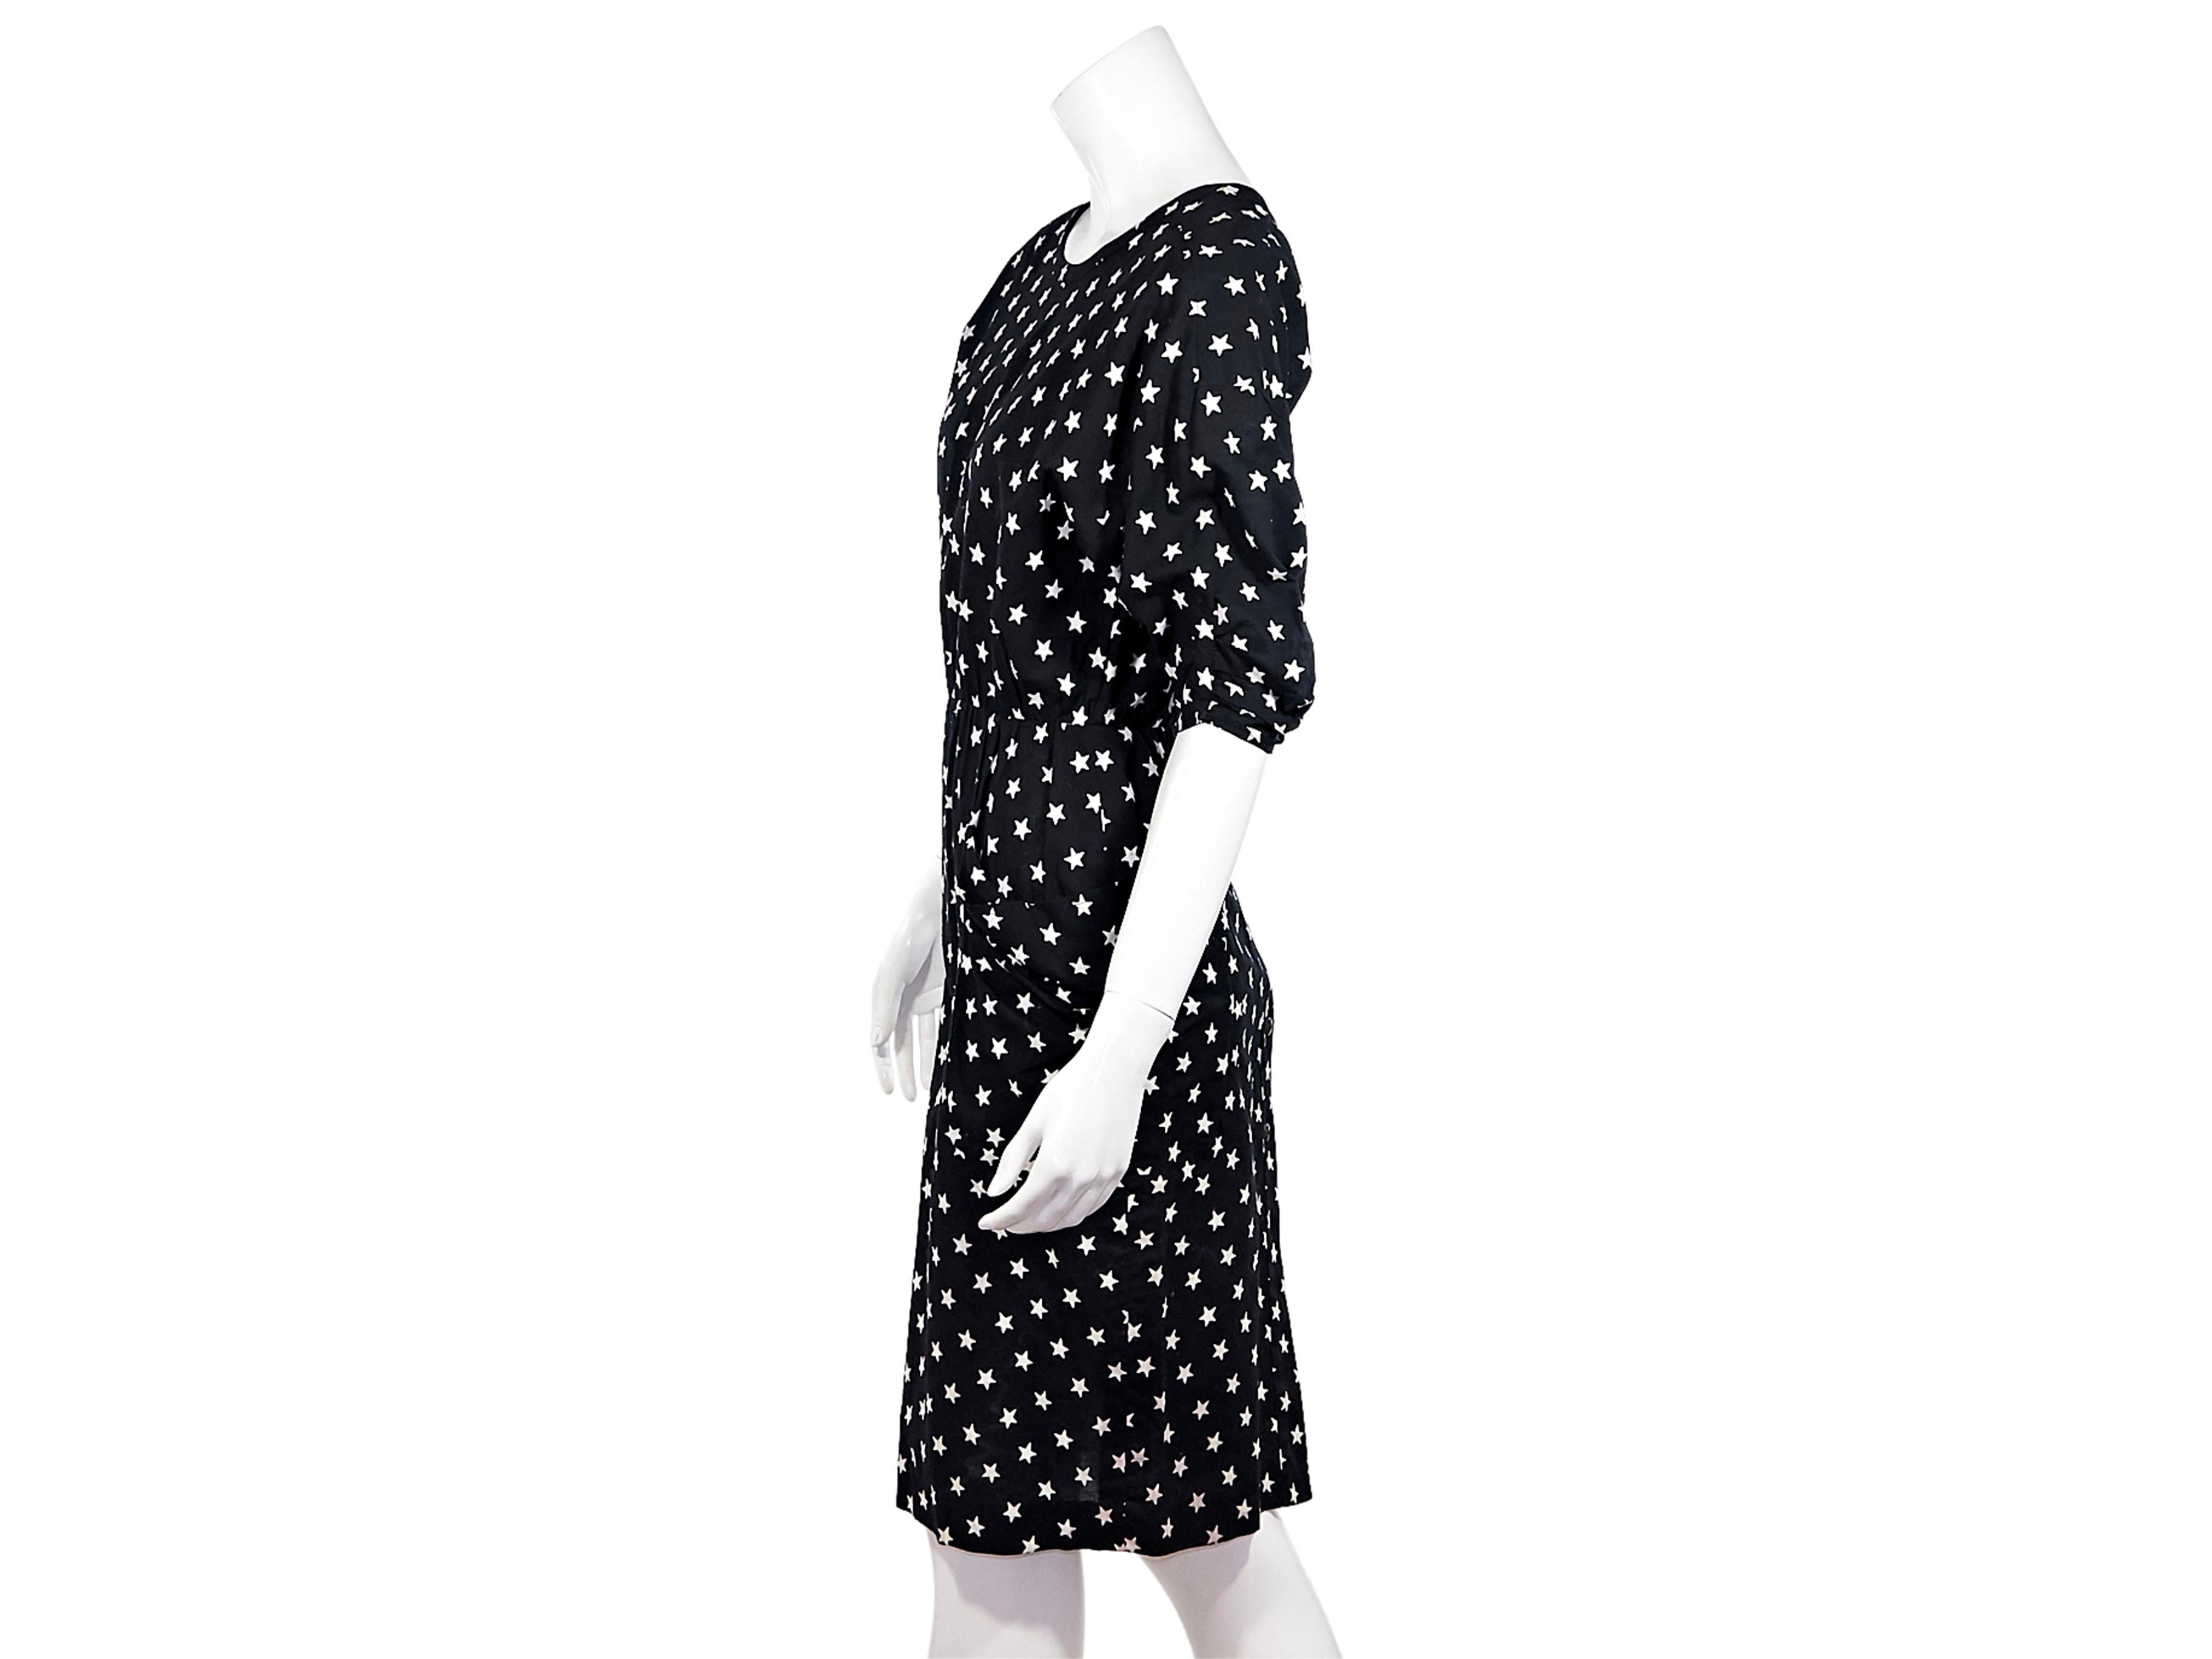 Product details:  Vintage black printed cotton dress by Fendi 365.  Scoop neck.  Elbow length sleeves.  Contrast star print. Concealed back zip. Cinched waist. Label size EU 42. 36